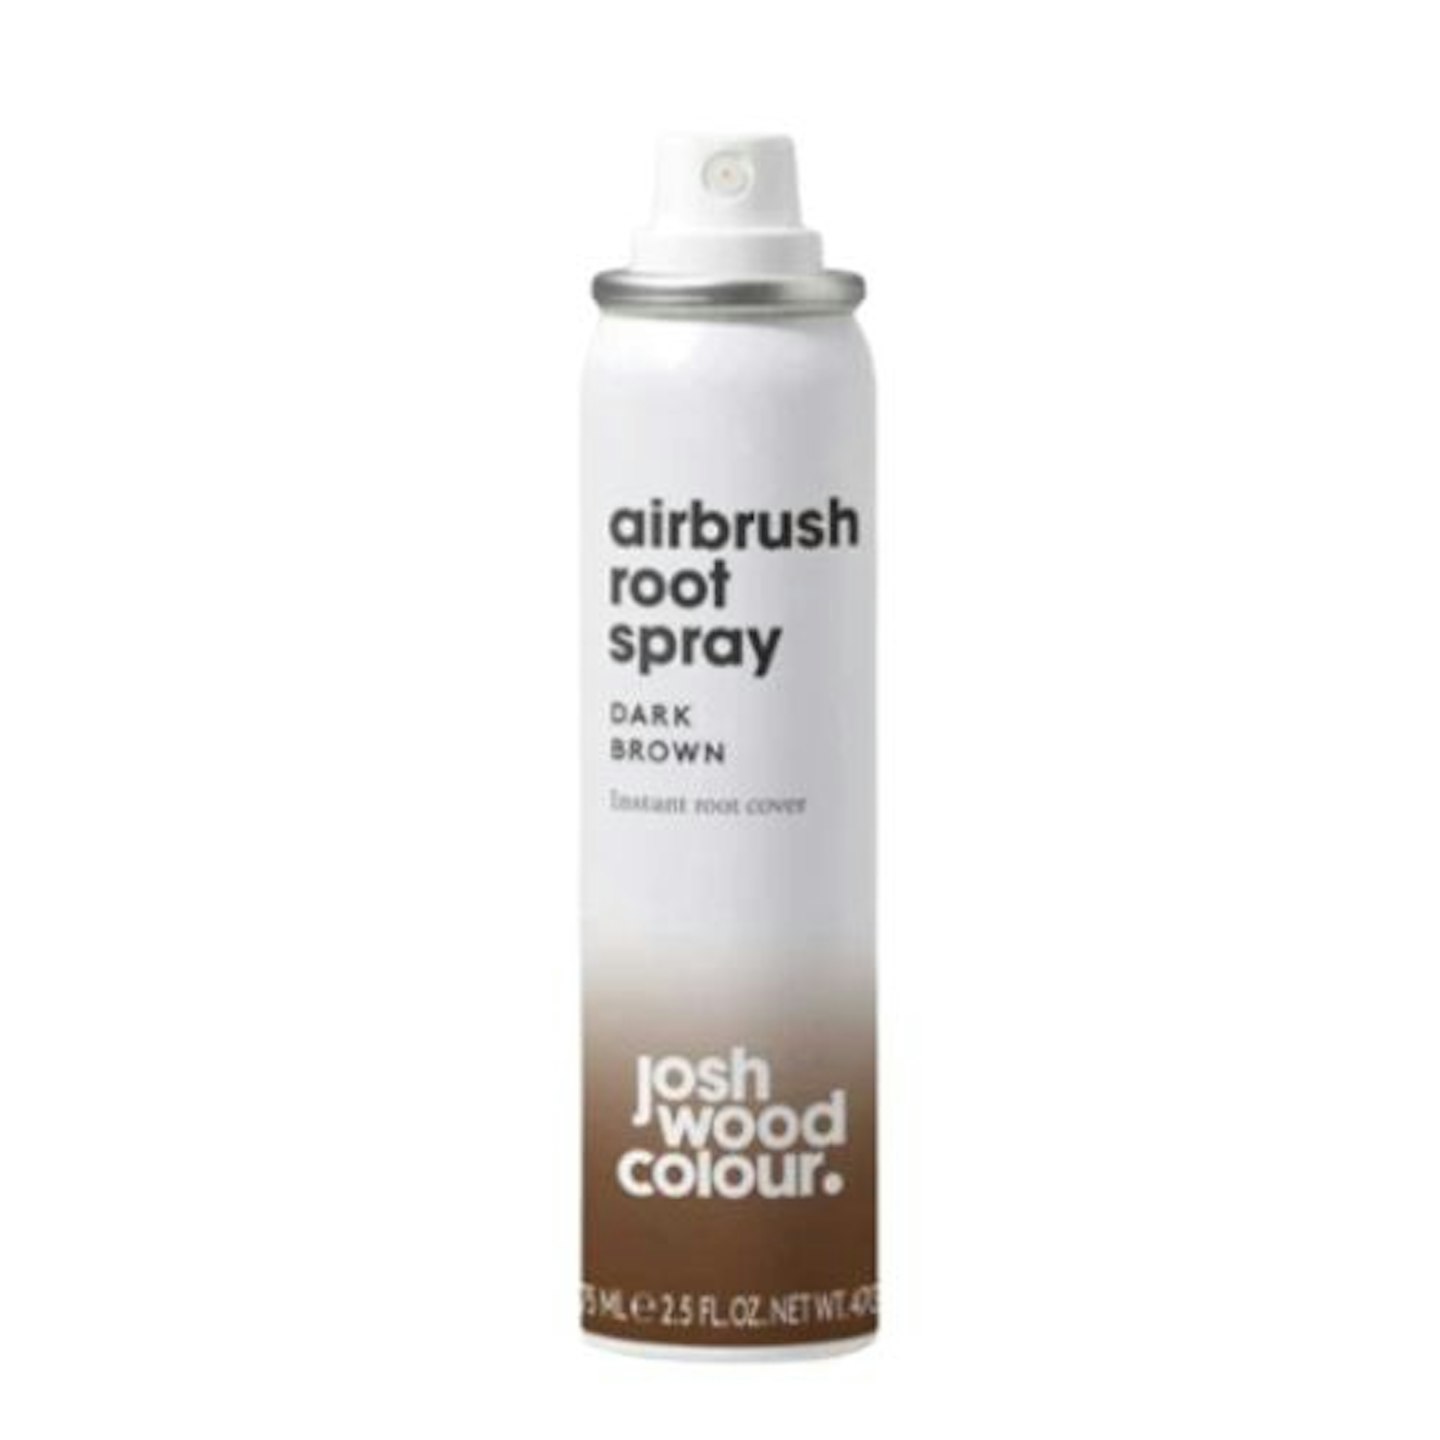 Josh Wood Colour Dark Brown Airbrush - Root Spray